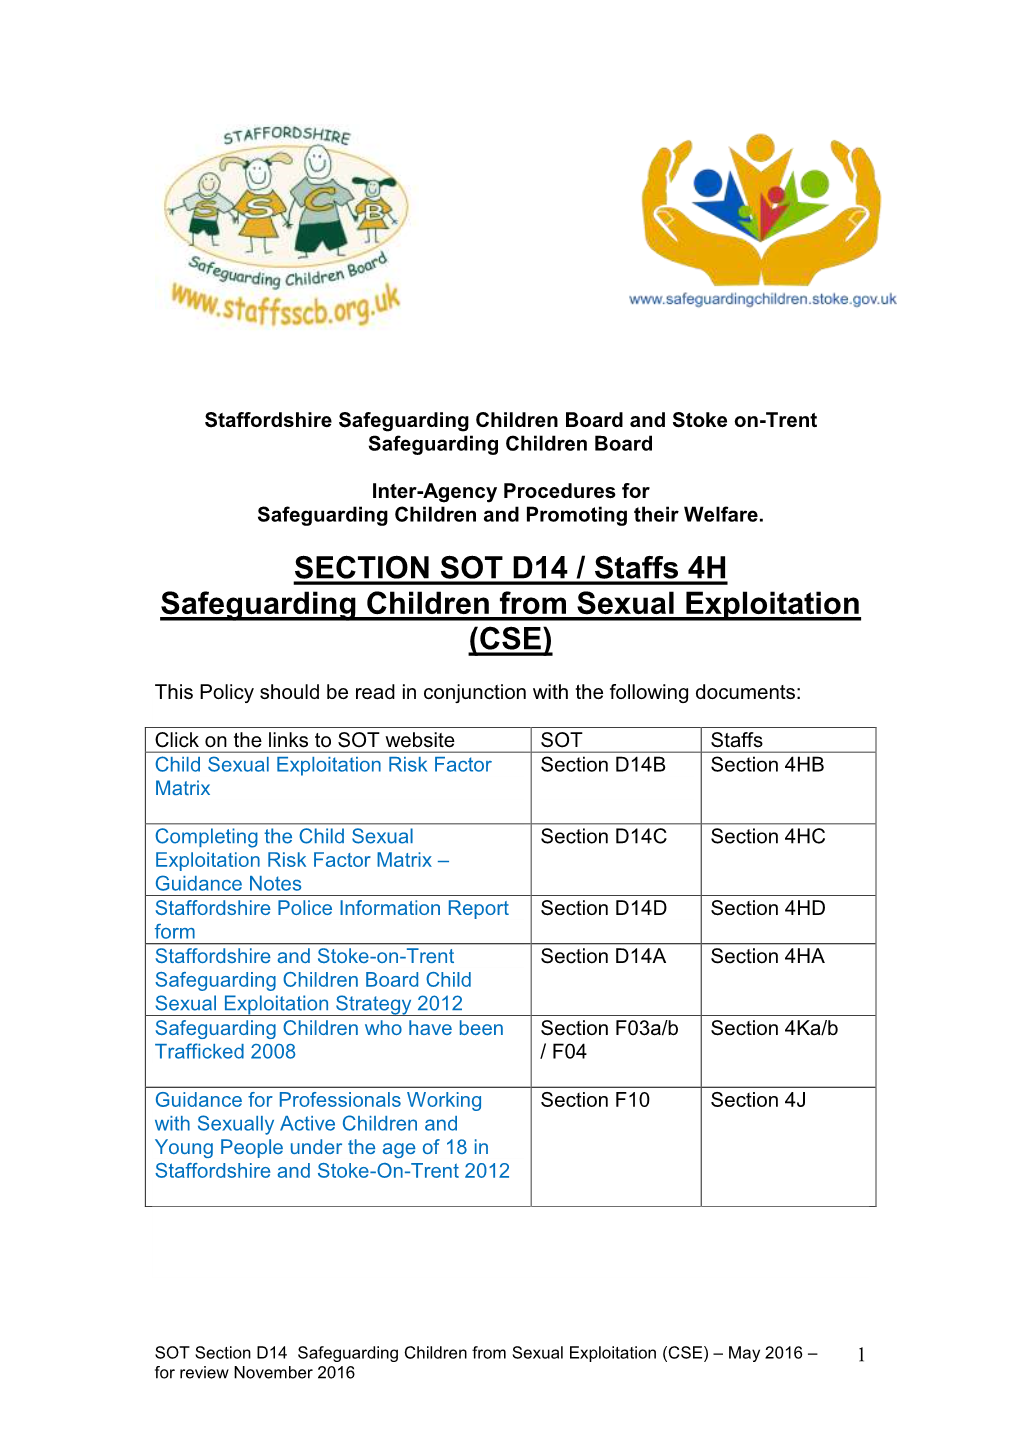 SECTION SOT D14 / Staffs 4H Safeguarding Children from Sexual Exploitation (CSE)